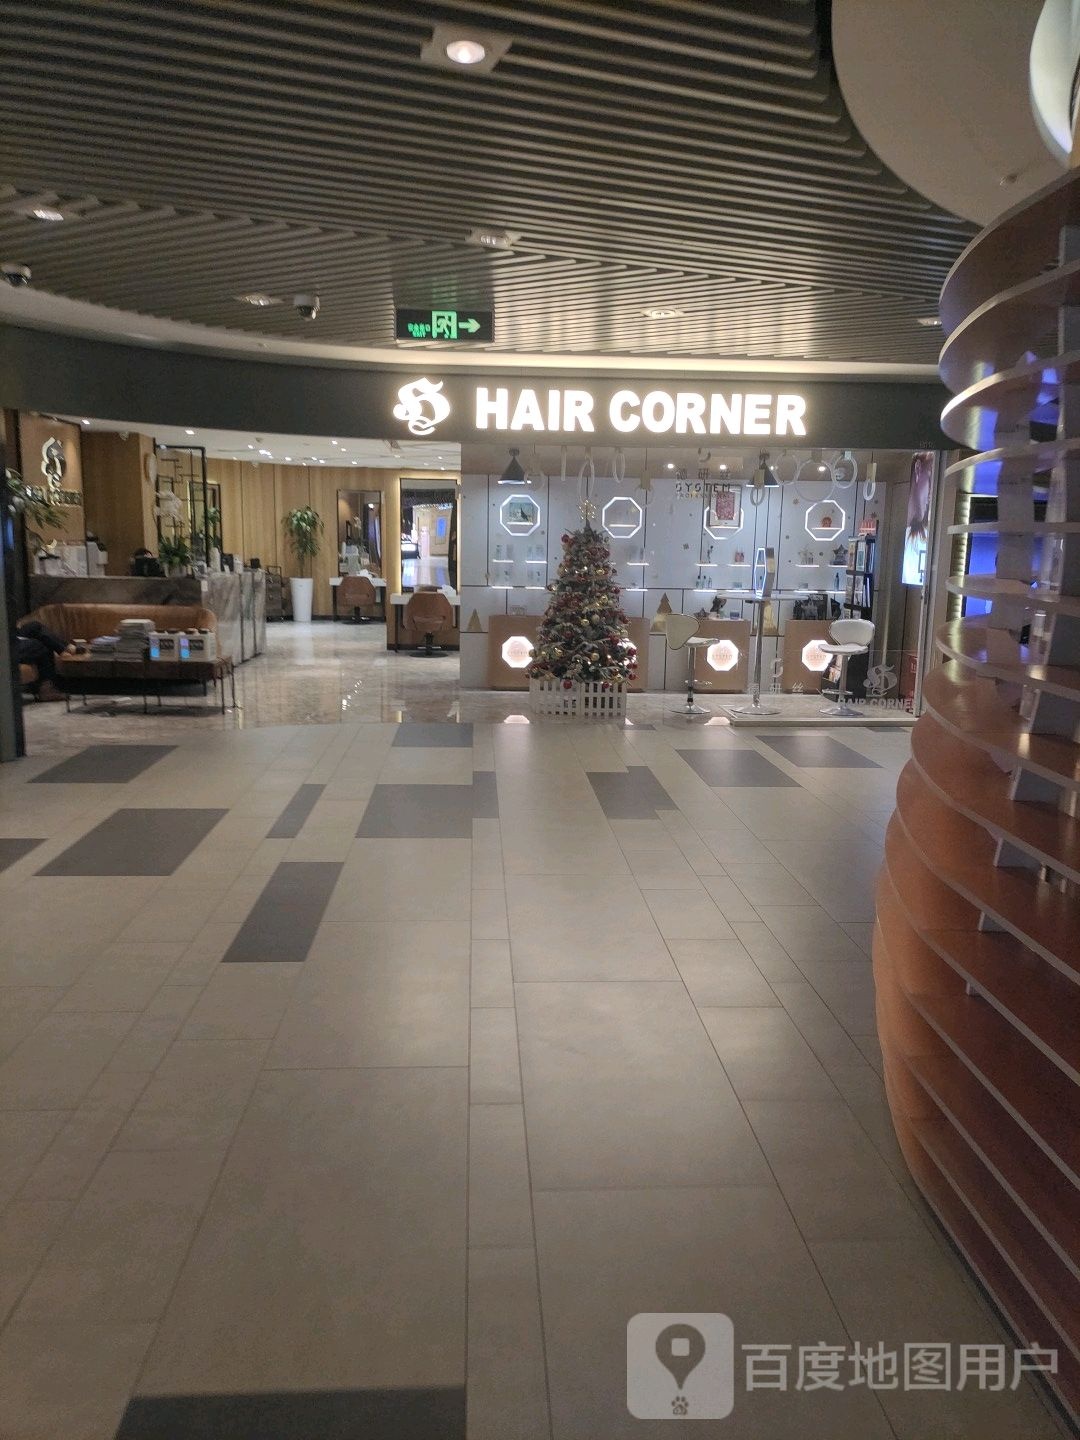 haircorner香港专业美发沙龙k11购物艺术中心店